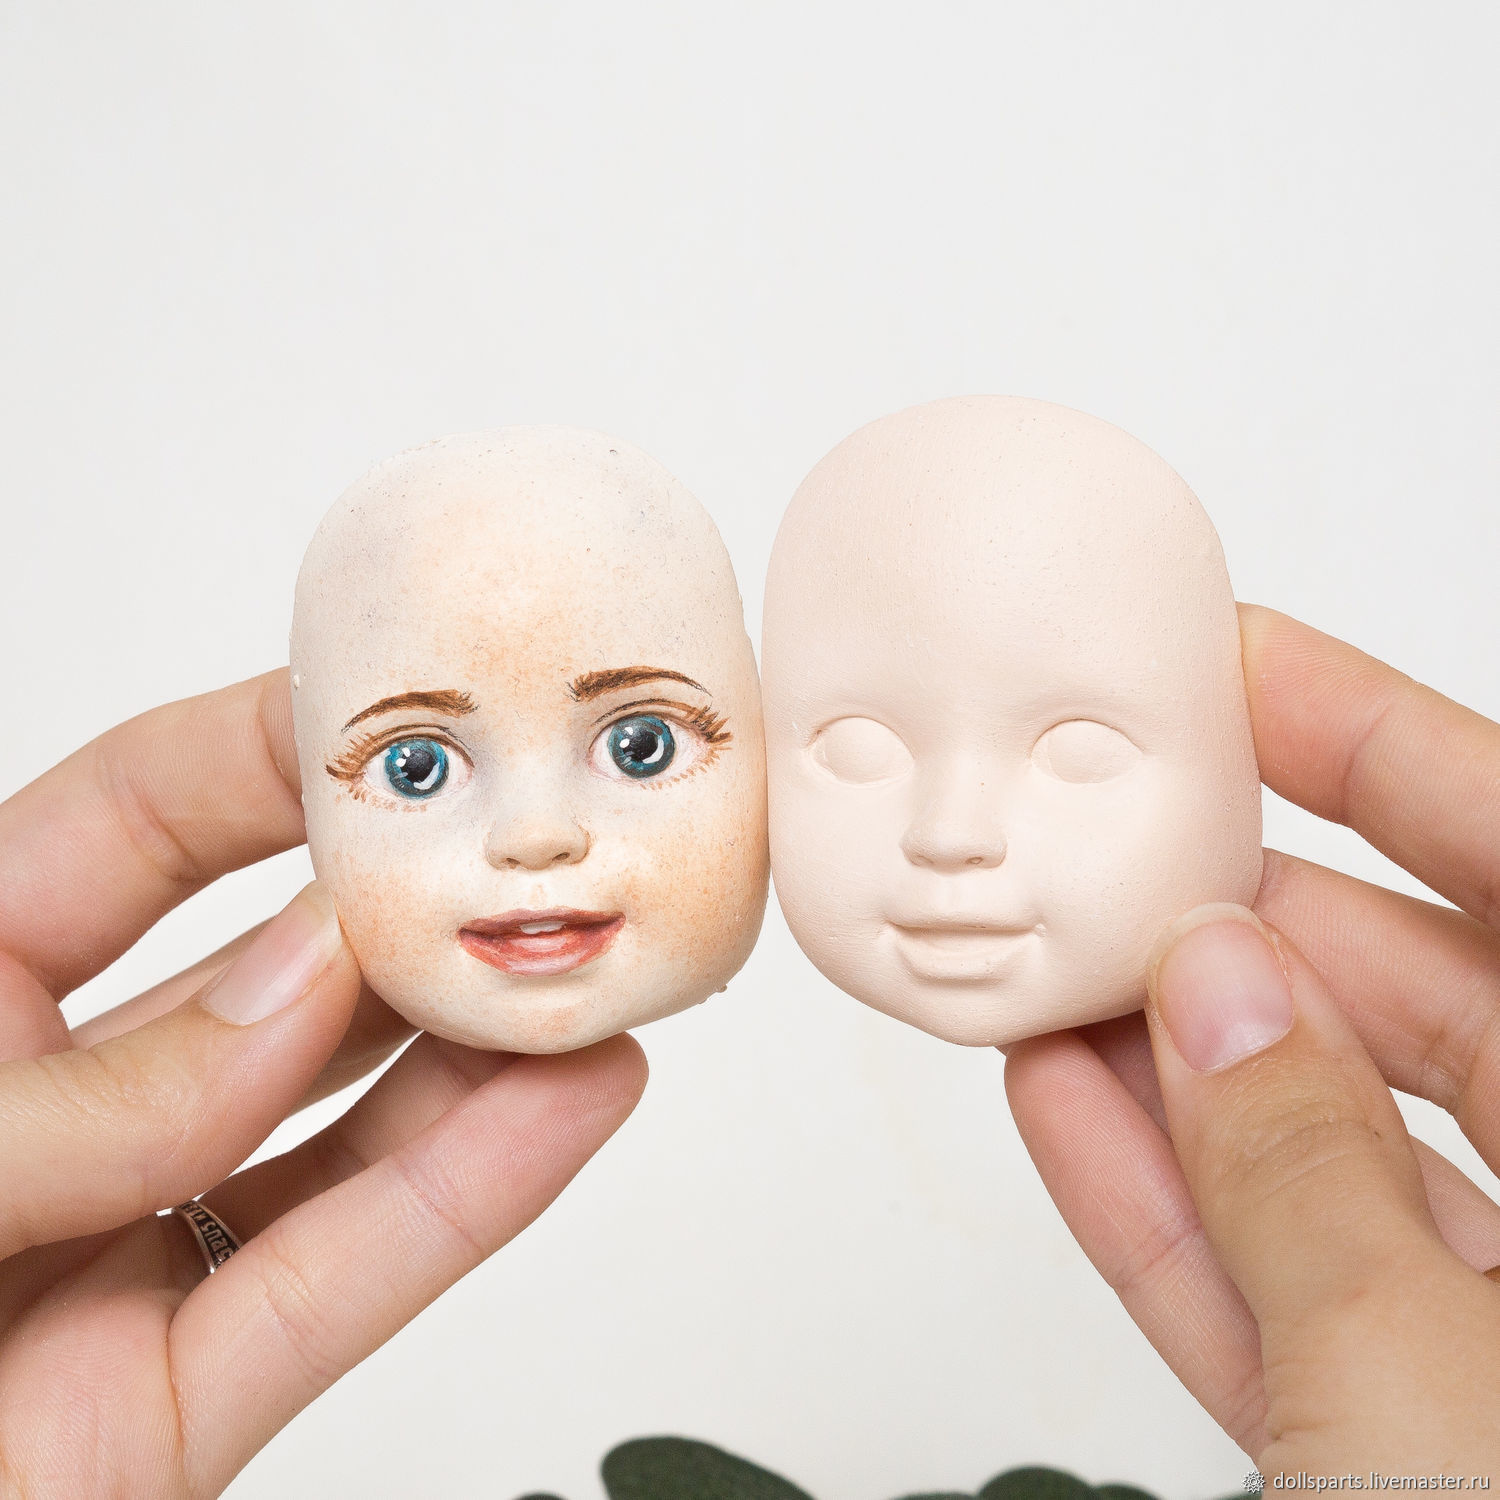 Купить куклу молд. Молд кукольного лица. Молды для кукольных лиц. Молды для полимерной глины куклы лицо. Молд для лица ватной куклы.